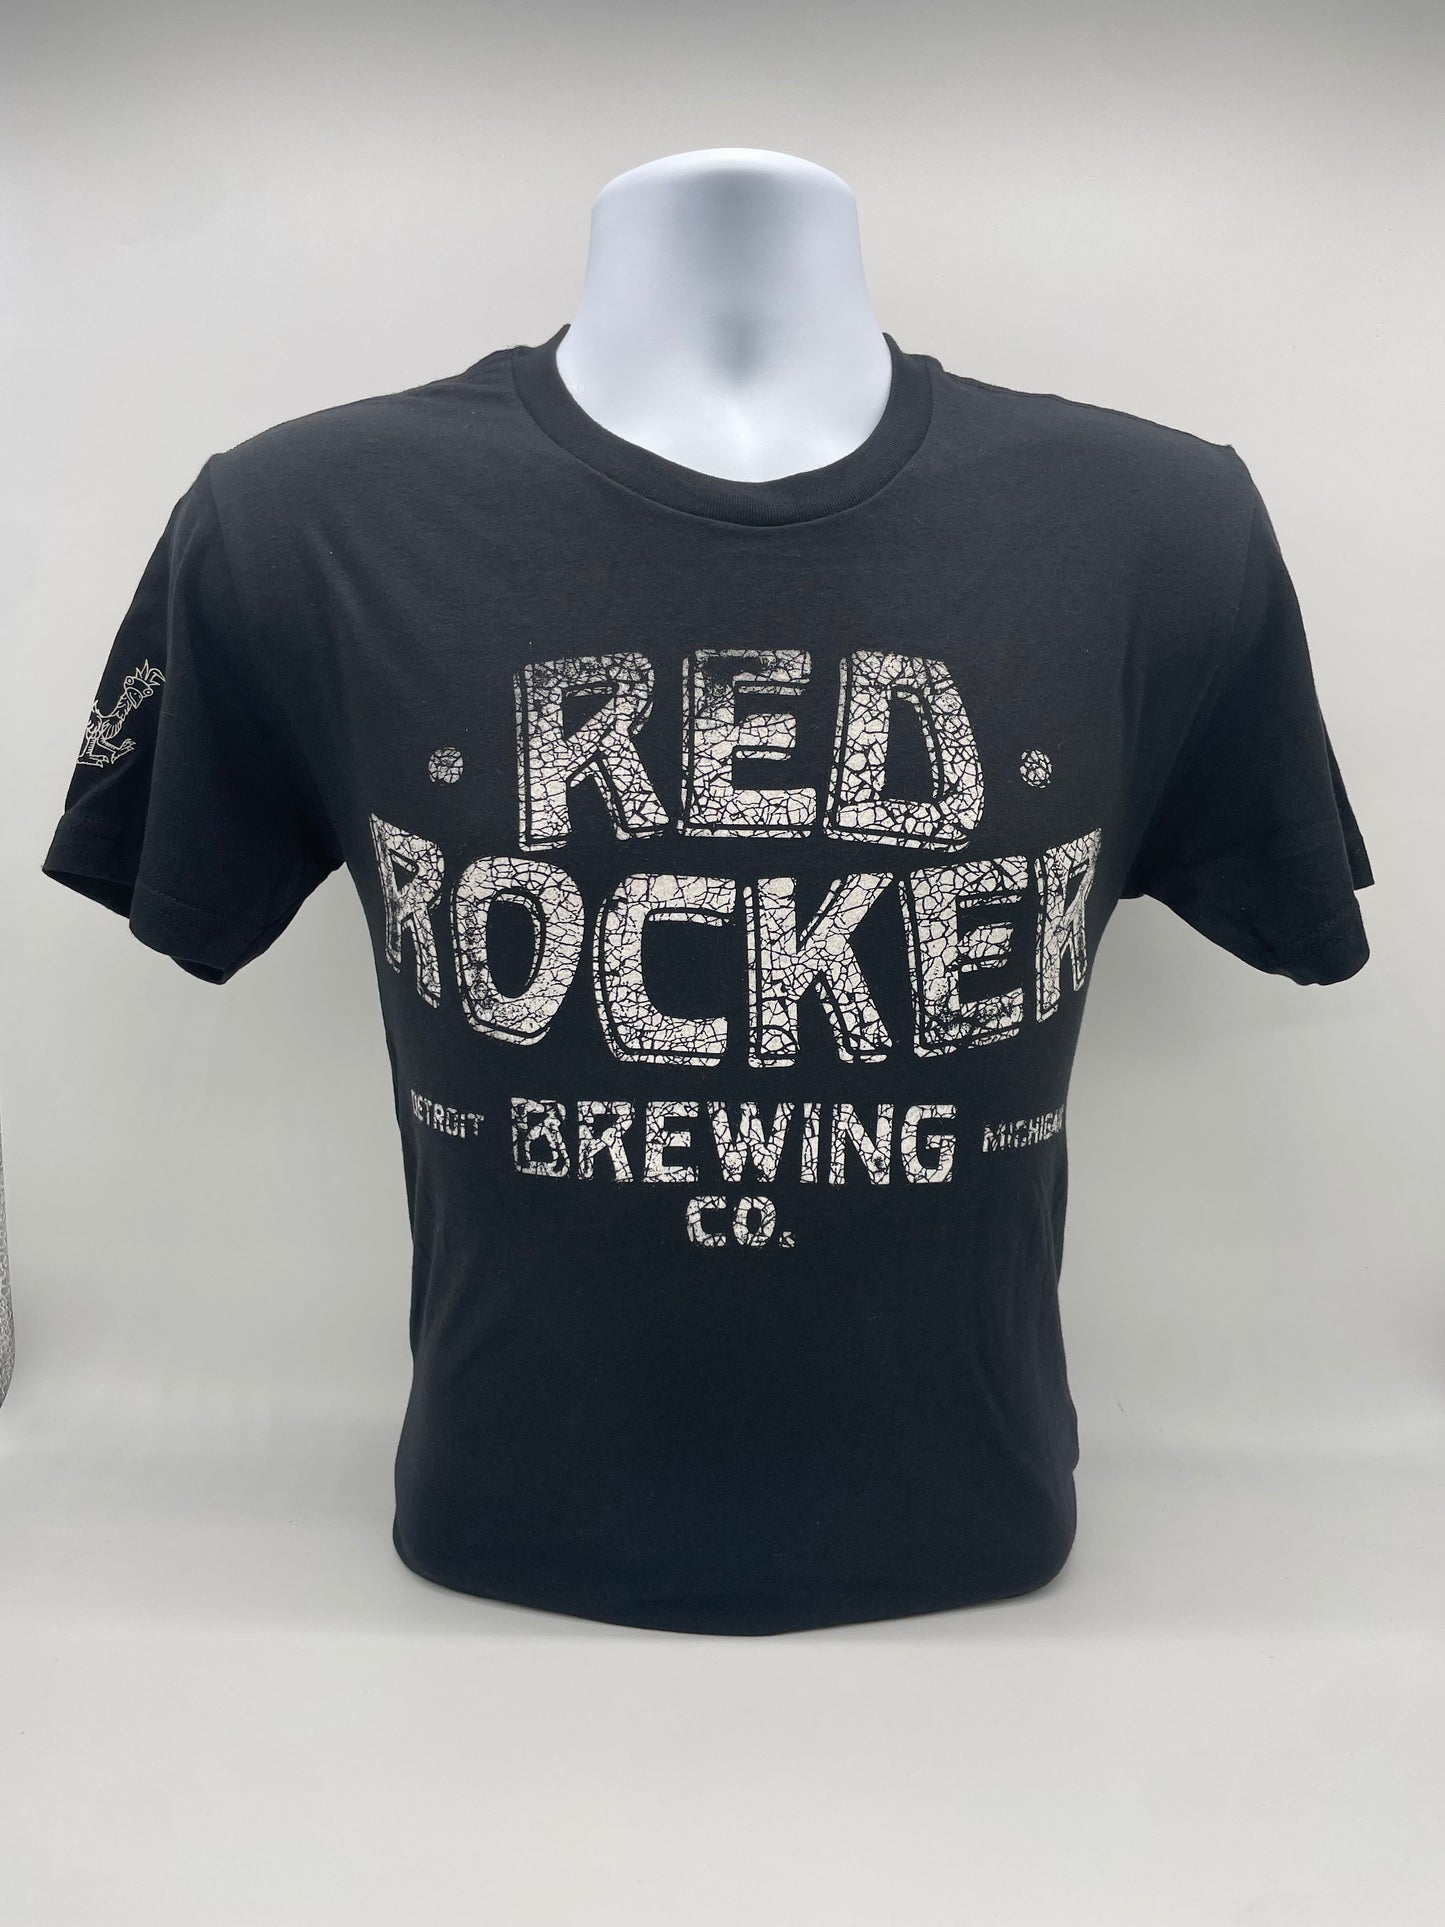 Red Rocker Brewing Co. Writing T-shirt